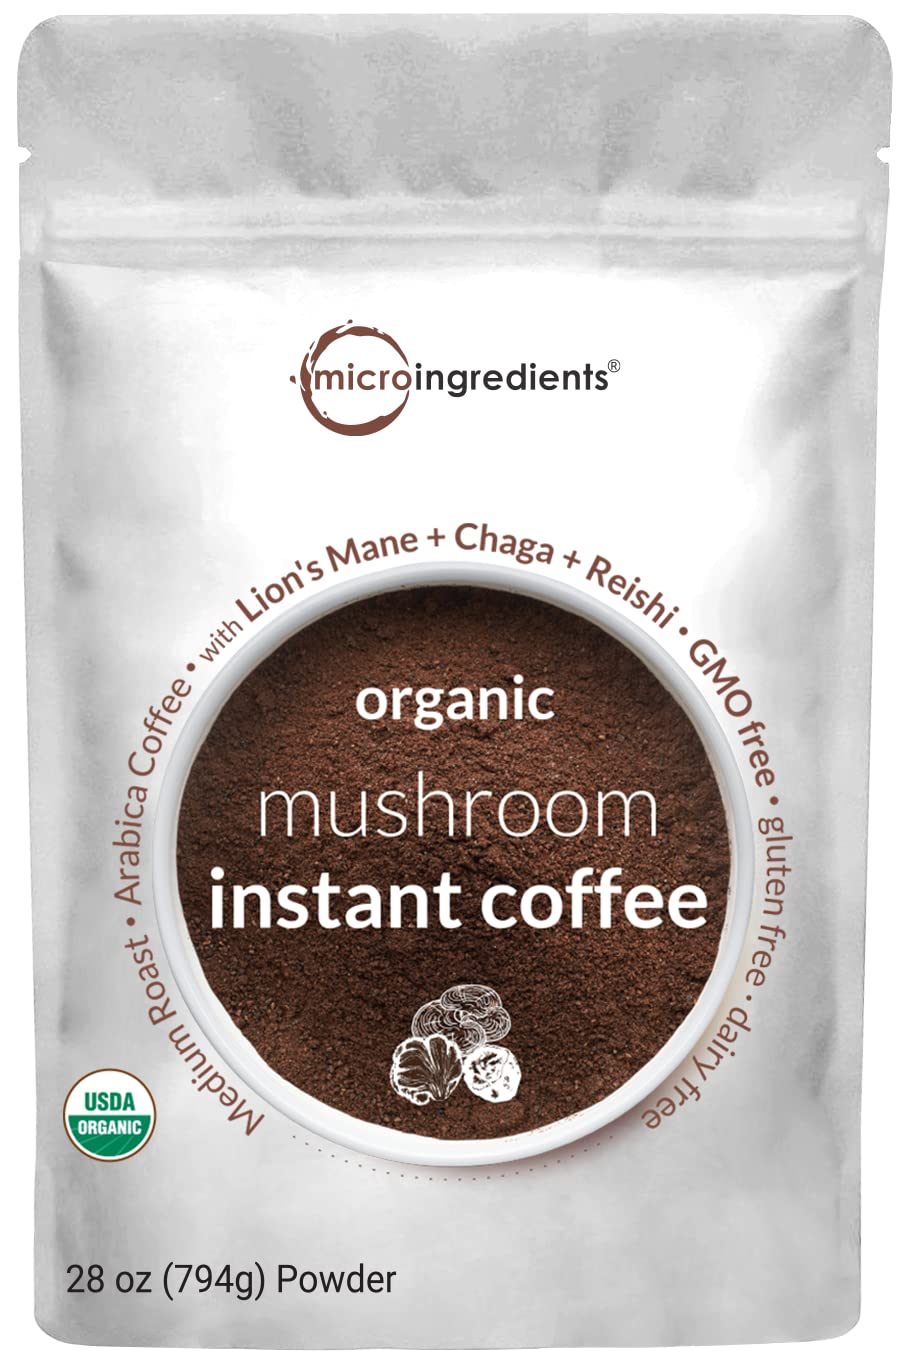 Organic Instant Mushroom Coffee Powder, (317 Servings) | Premium Arabica Coffee With Lion’s Mane, Chaga, & Reishi | Smooth Medium Roast Flavor, Clean Energy & Focus